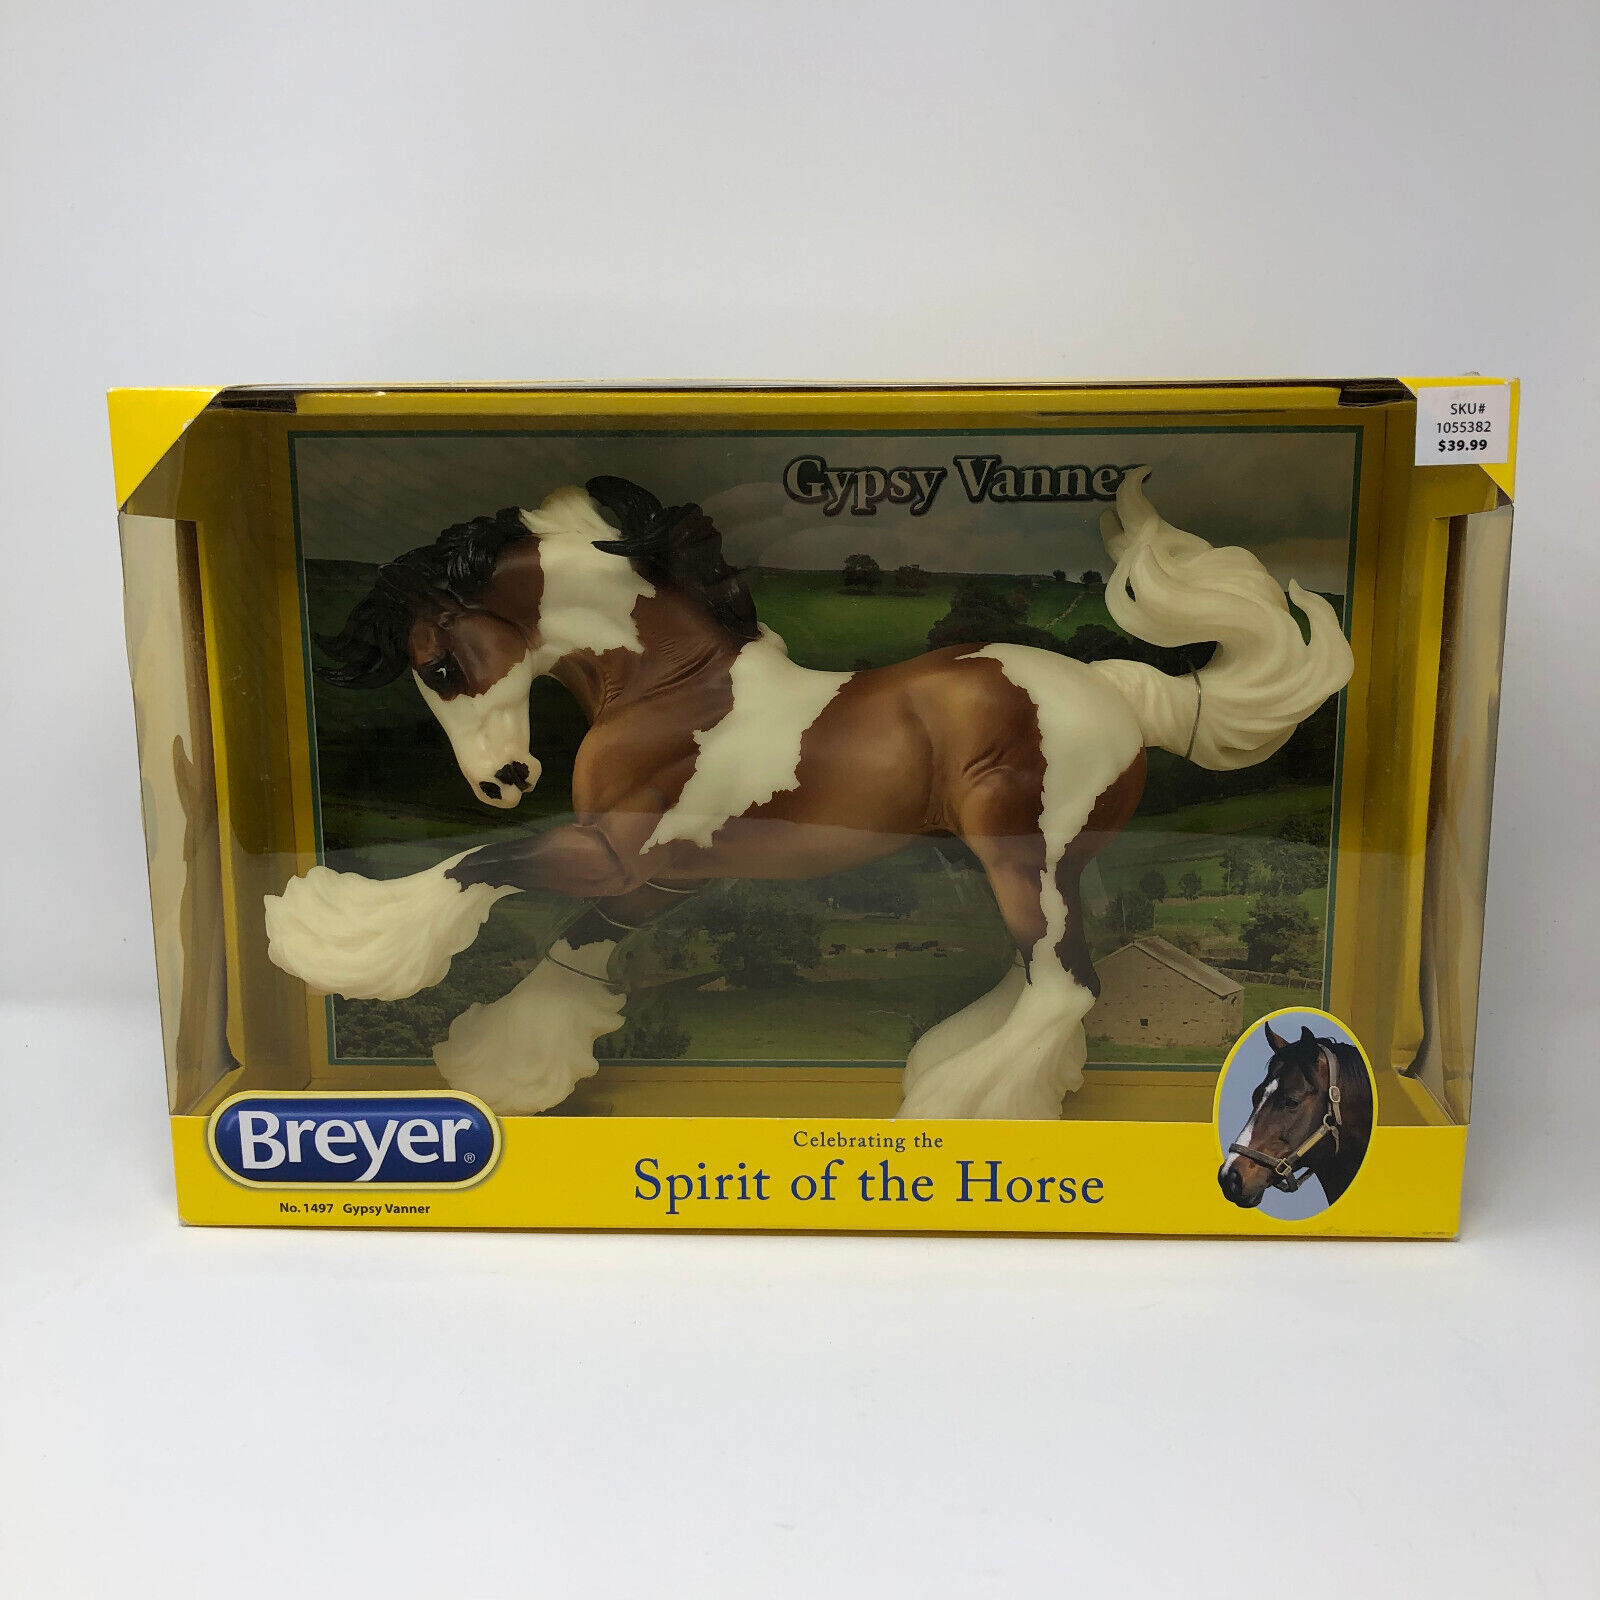 NIB Breyer 1497 Gypsy Vanner Figure Celebrating The Spirit Of The Horse SEALED